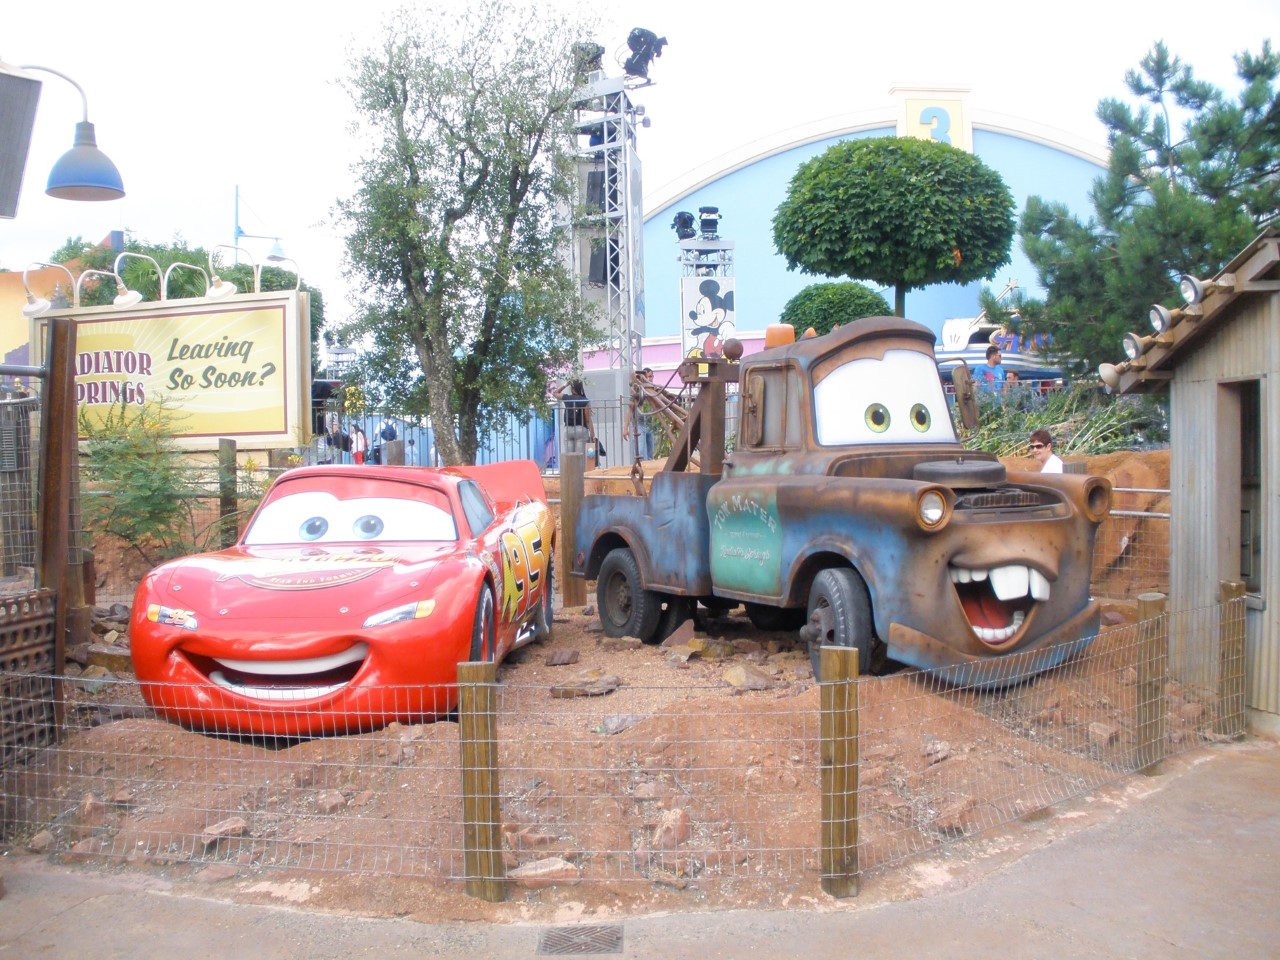 The Disney Cars attraction at Disneyland Paris